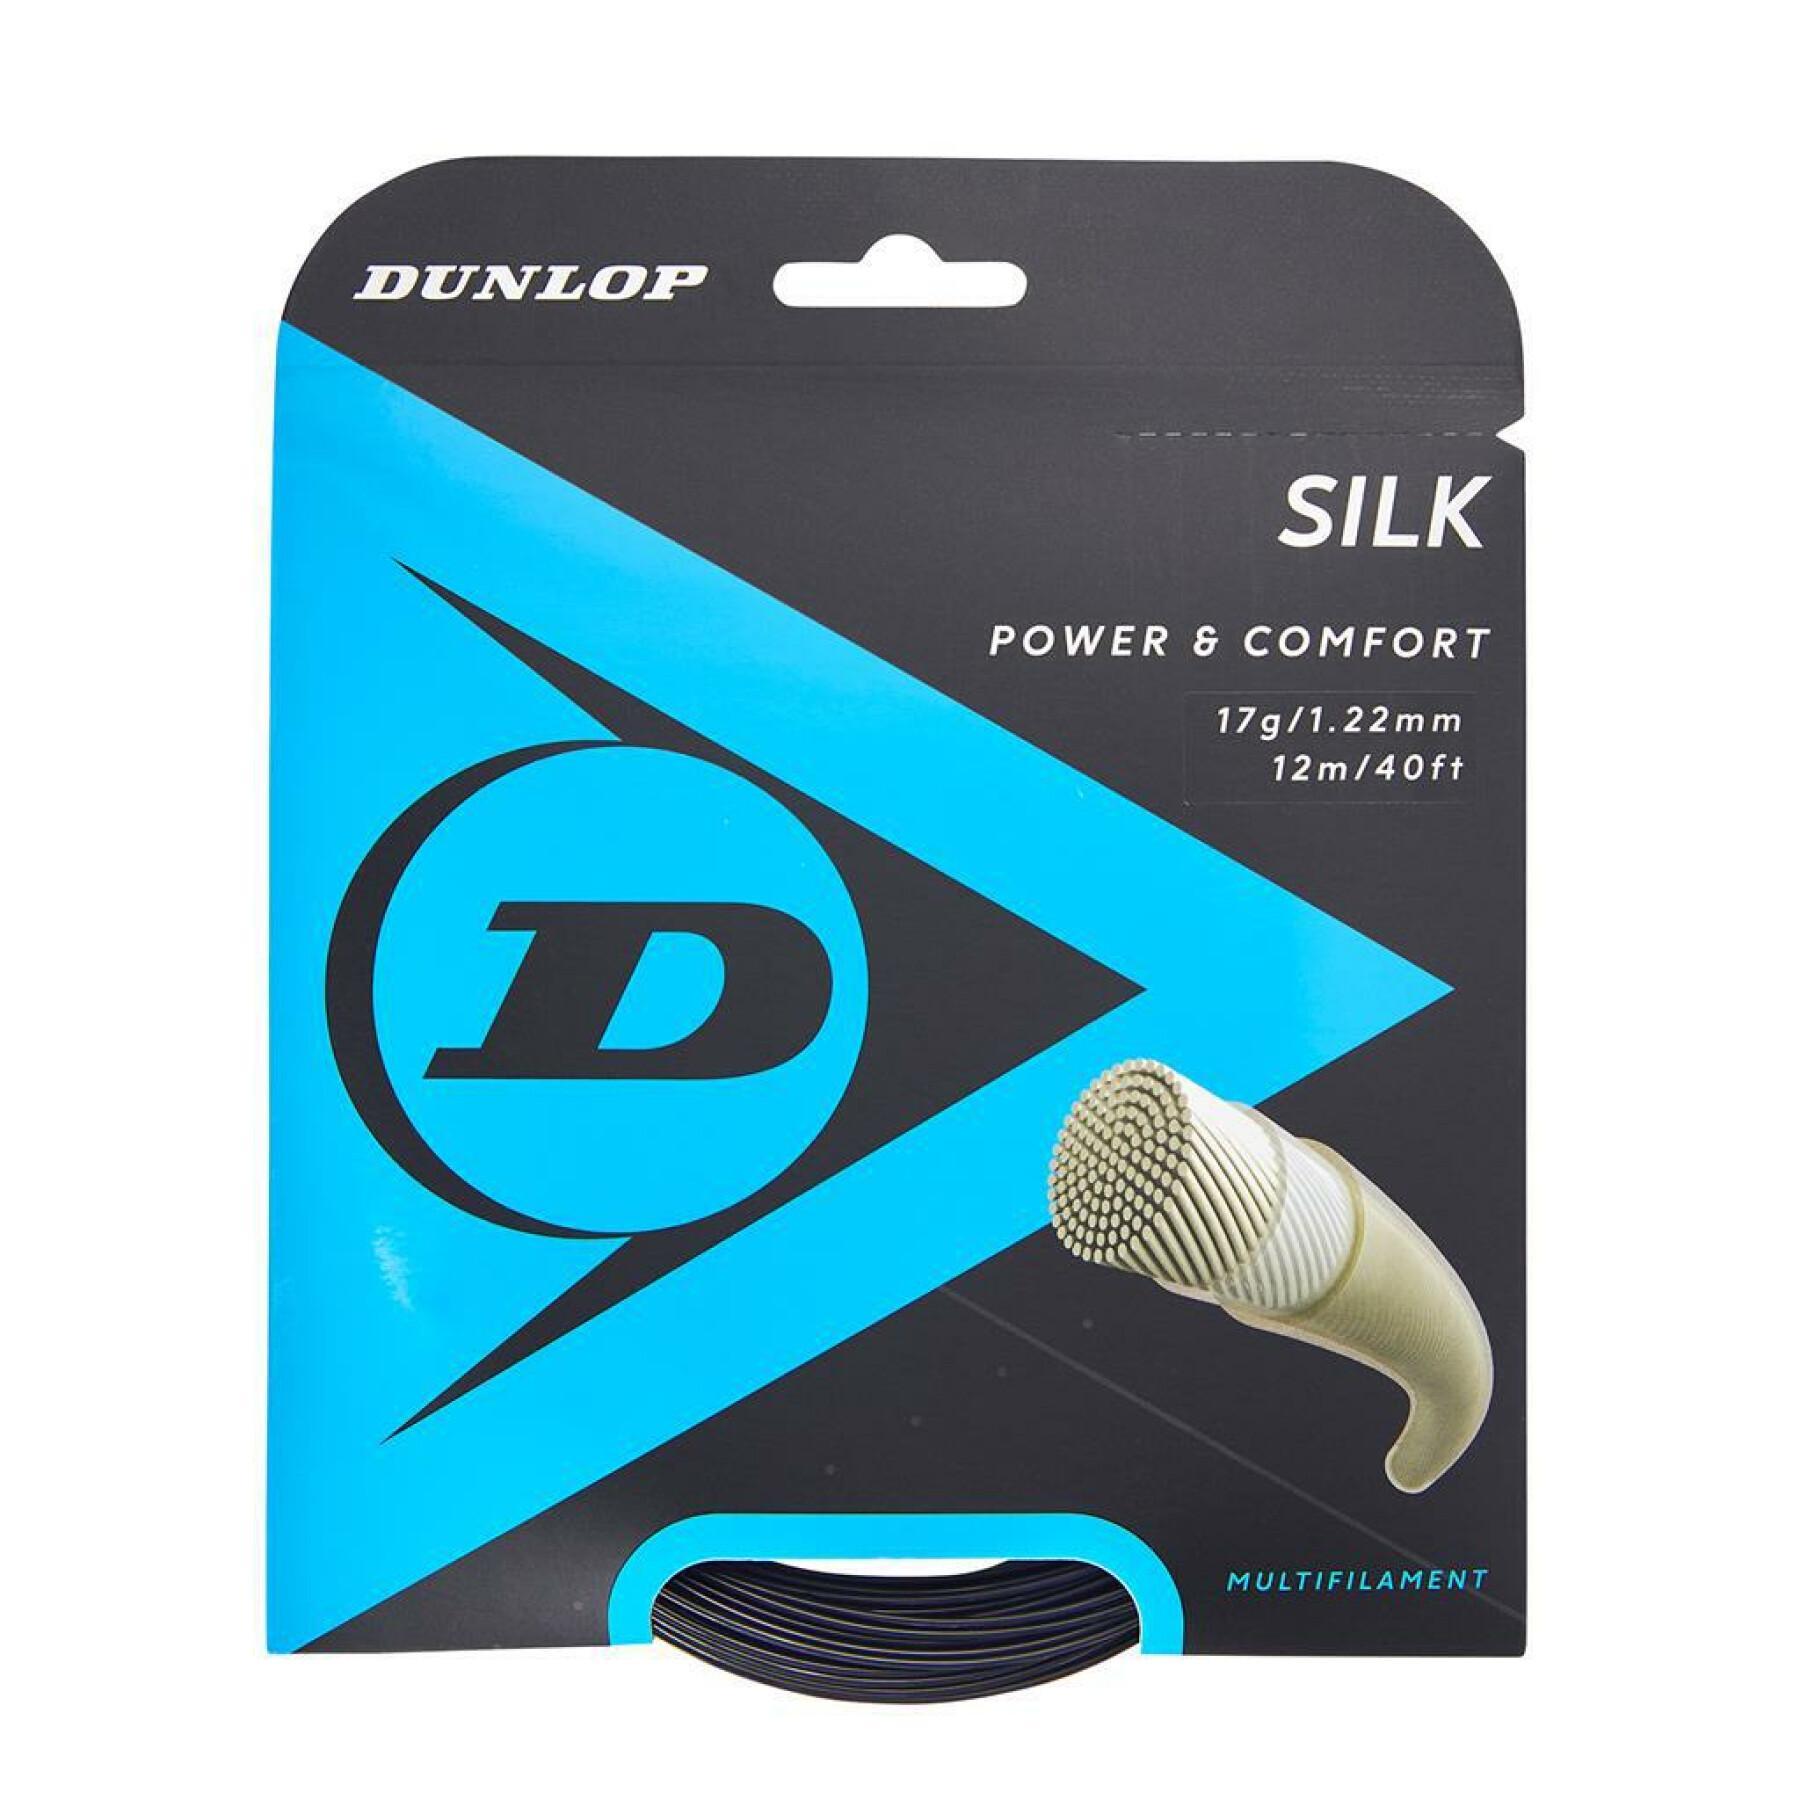 Rope Dunlop silk